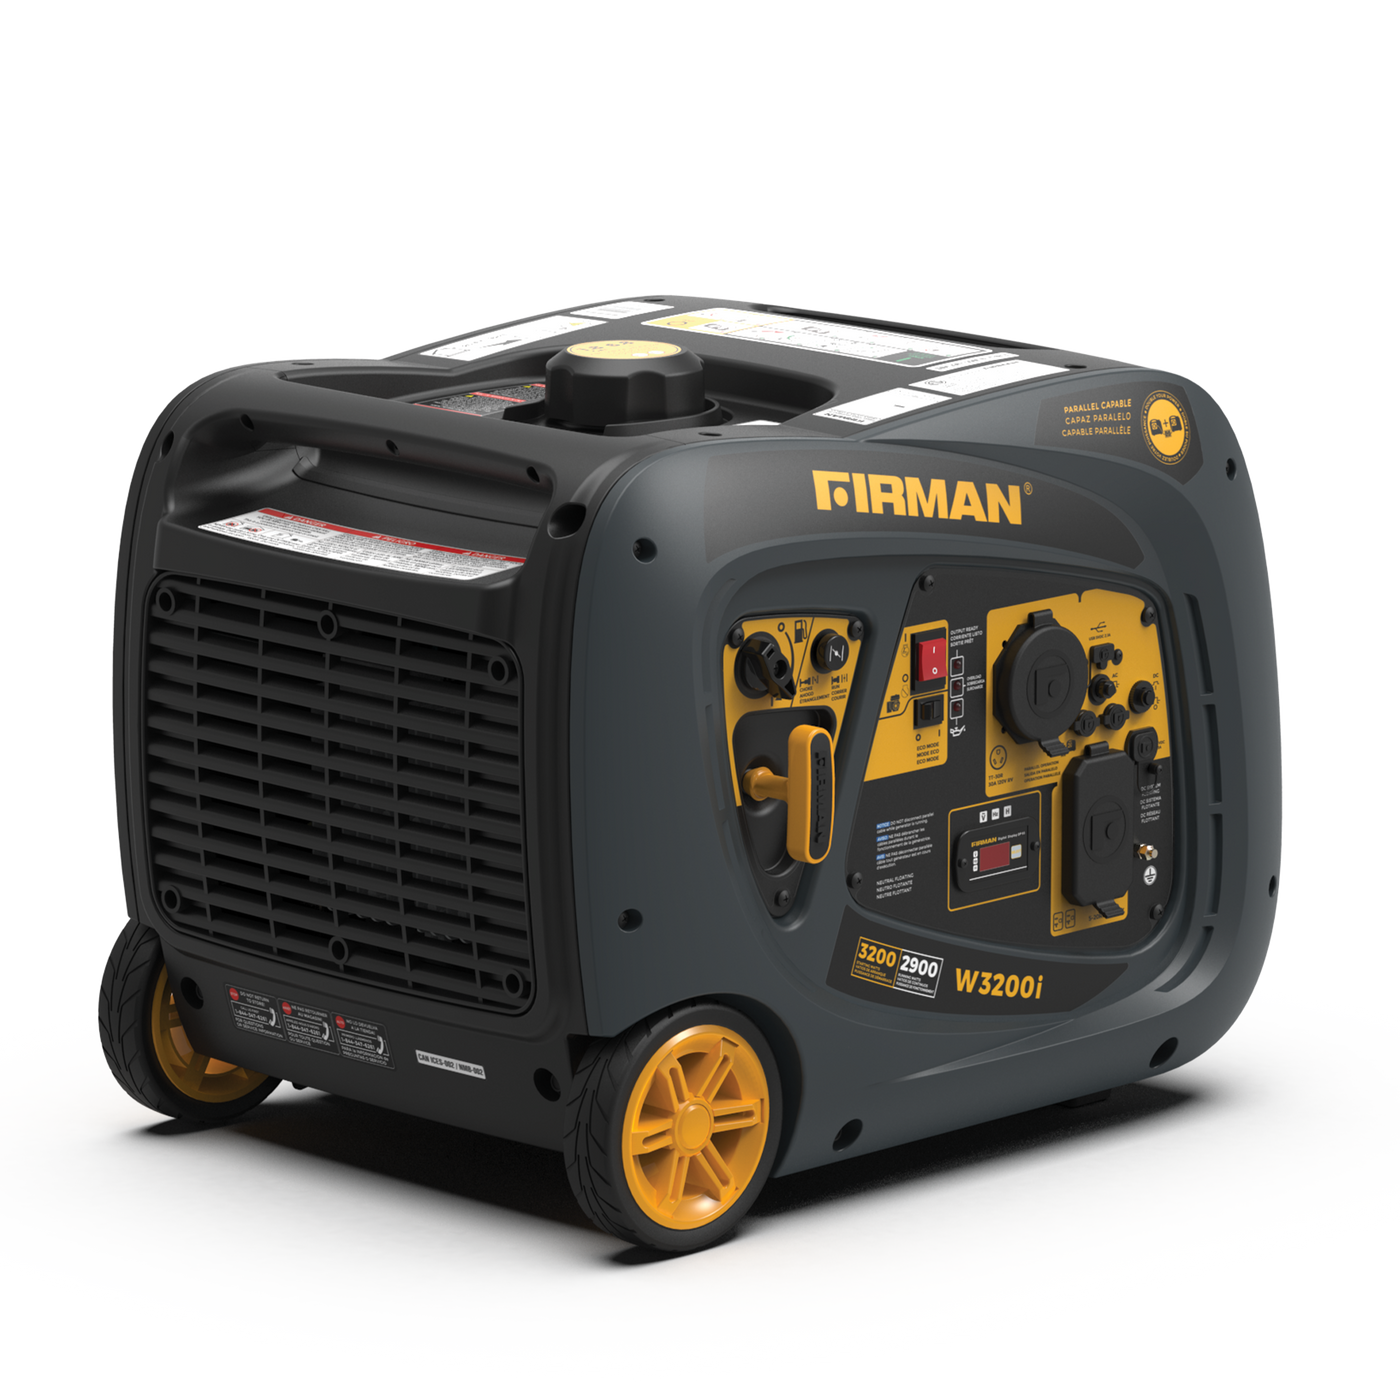 Inverter Portable Generator 3200W Recoil Start – FIRMAN Power